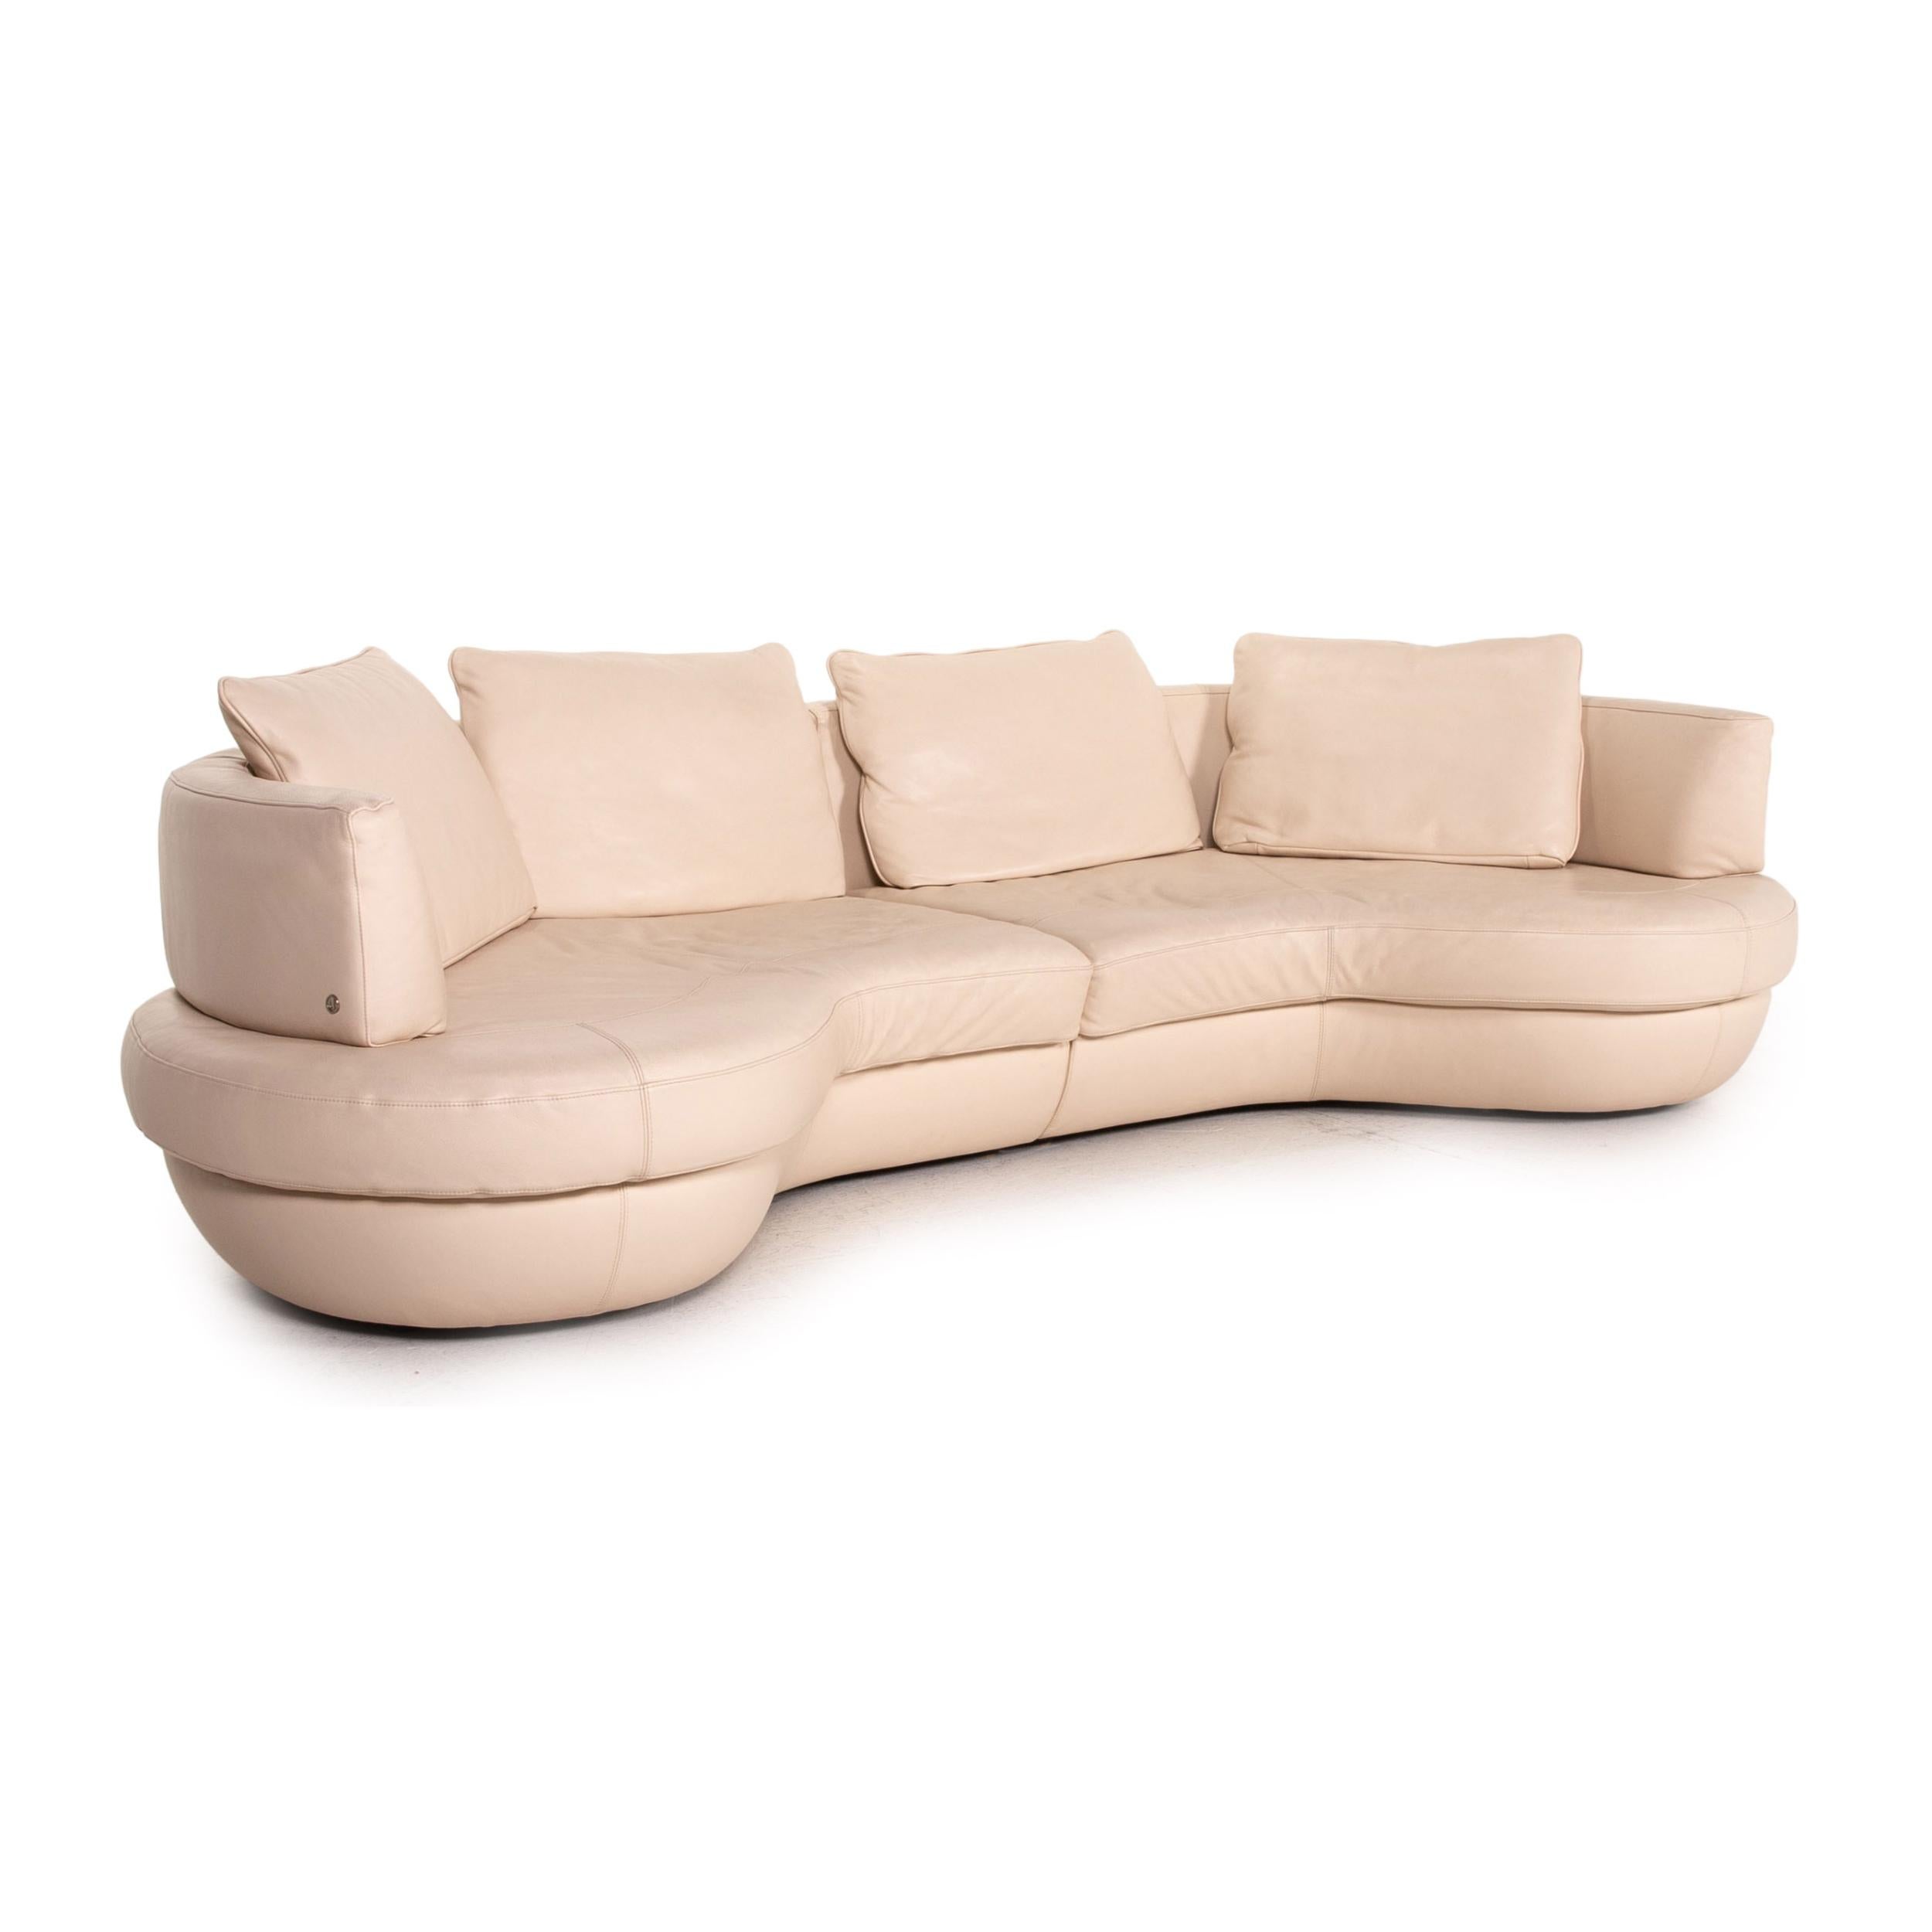 Natuzzi Leather Corner Sofa Cream Function Sofa Couch In Excellent Condition For Sale In Cologne, DE